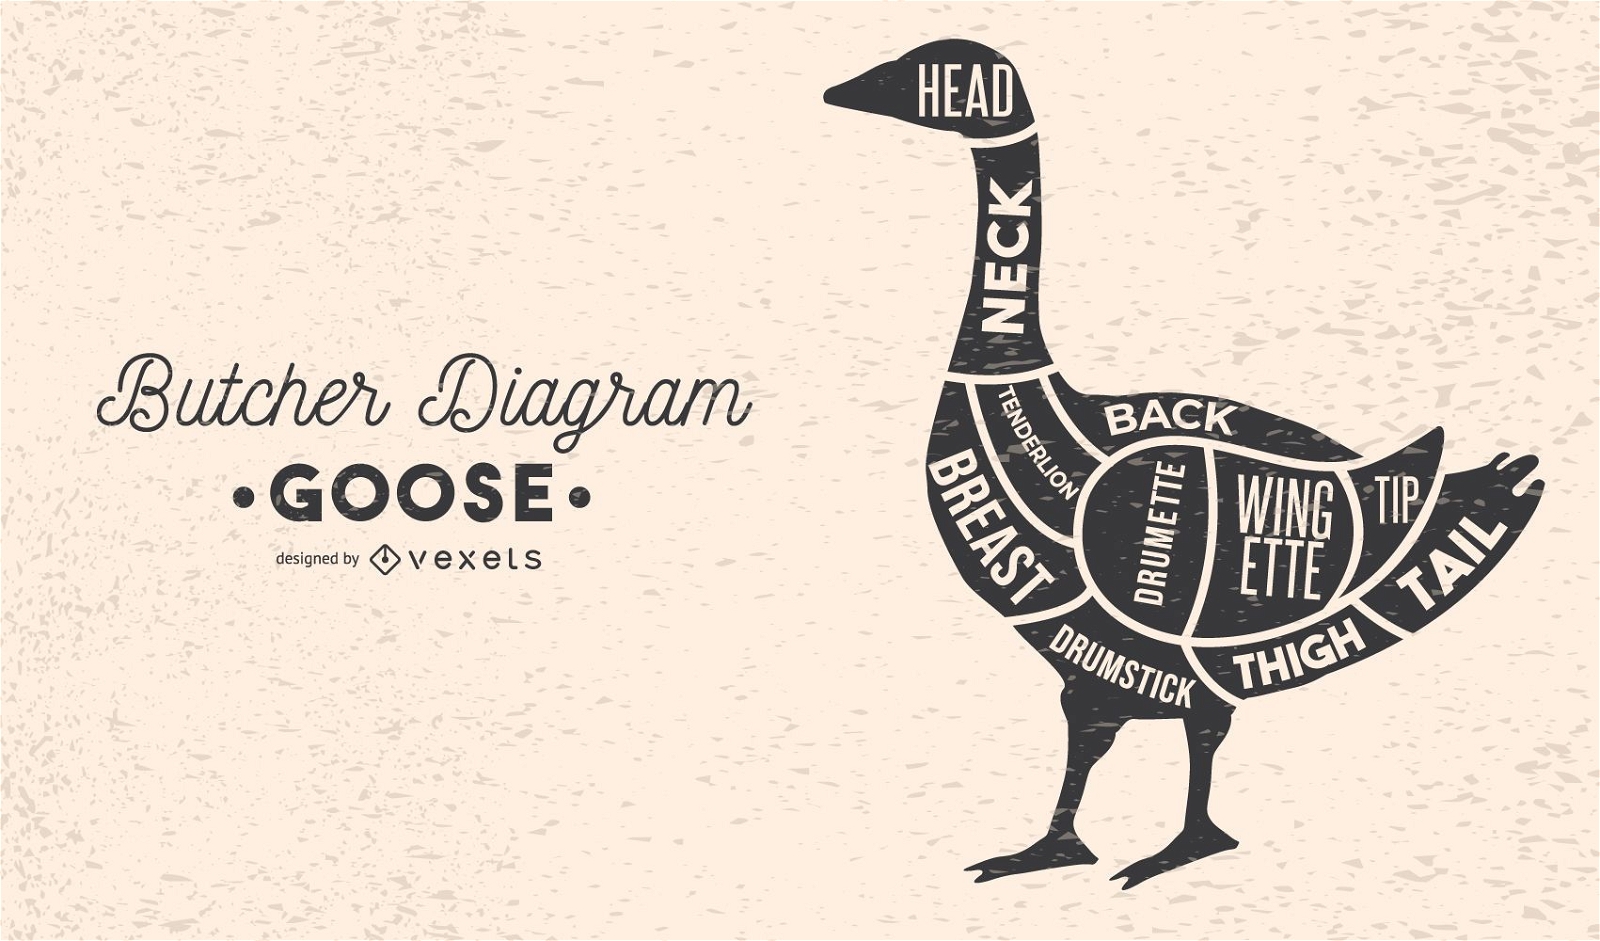 Goose Butcher Diagram